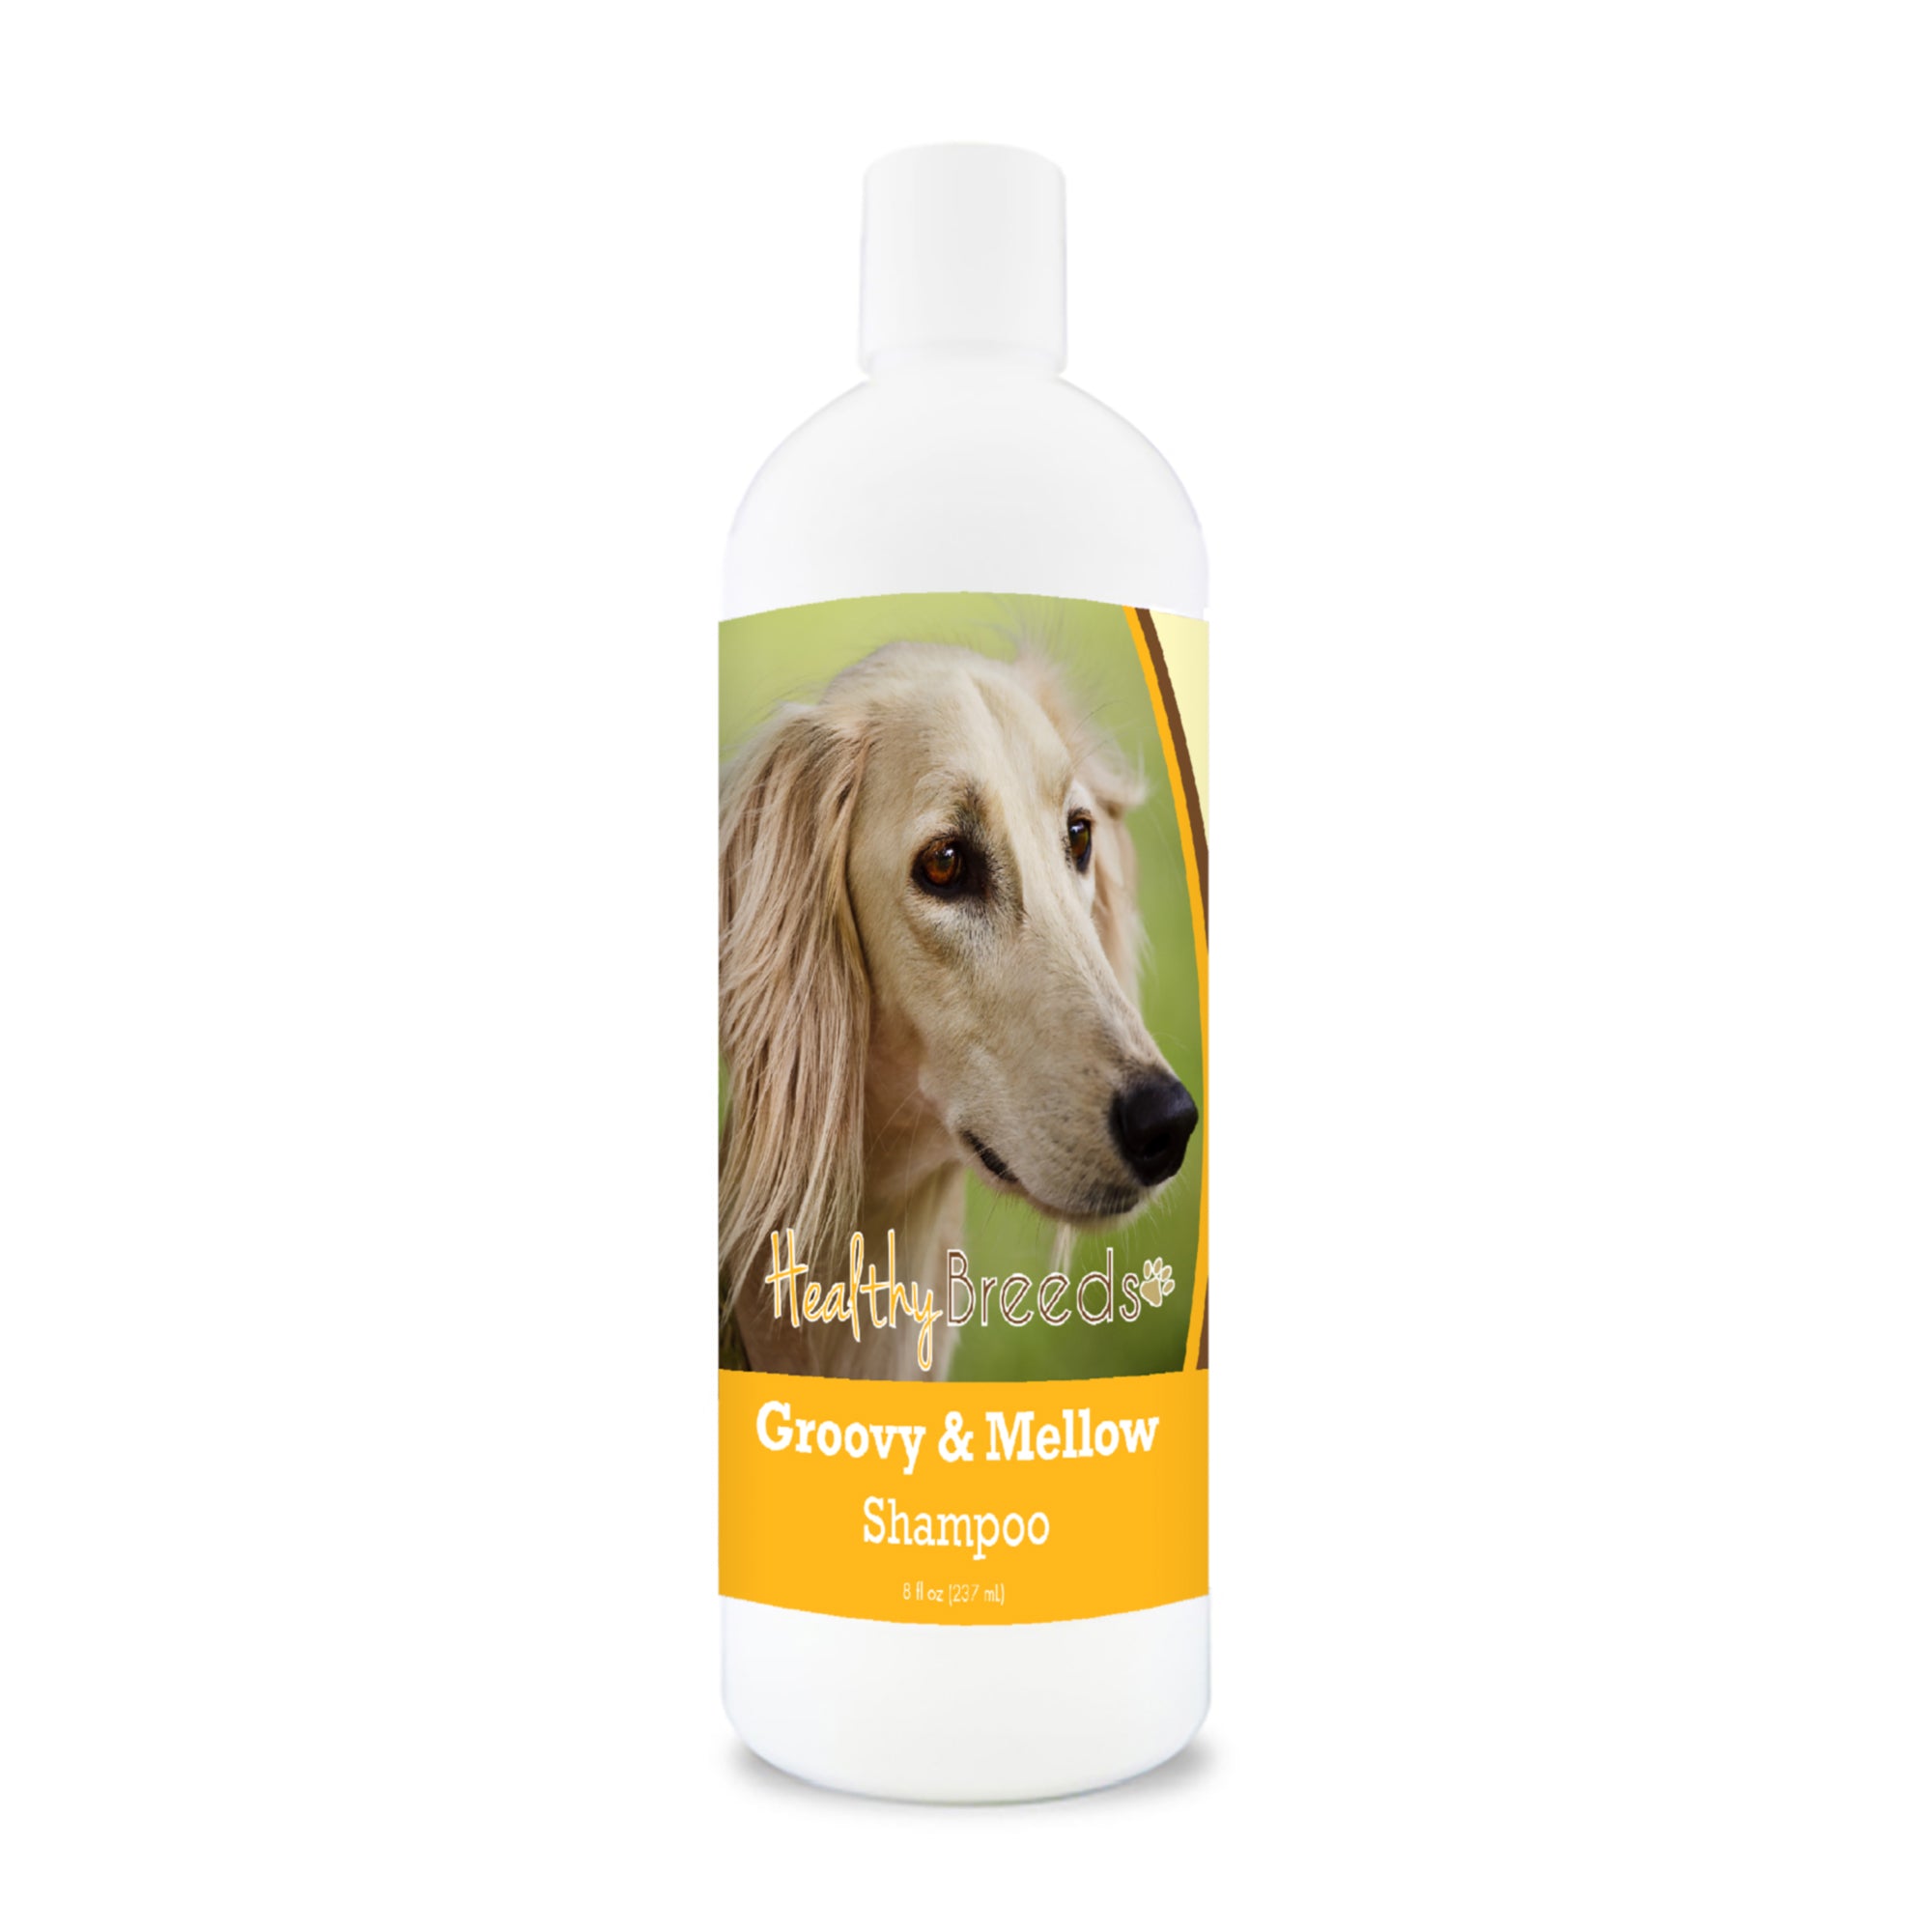 Saluki Groovy & Mellow Shampoo 8 oz